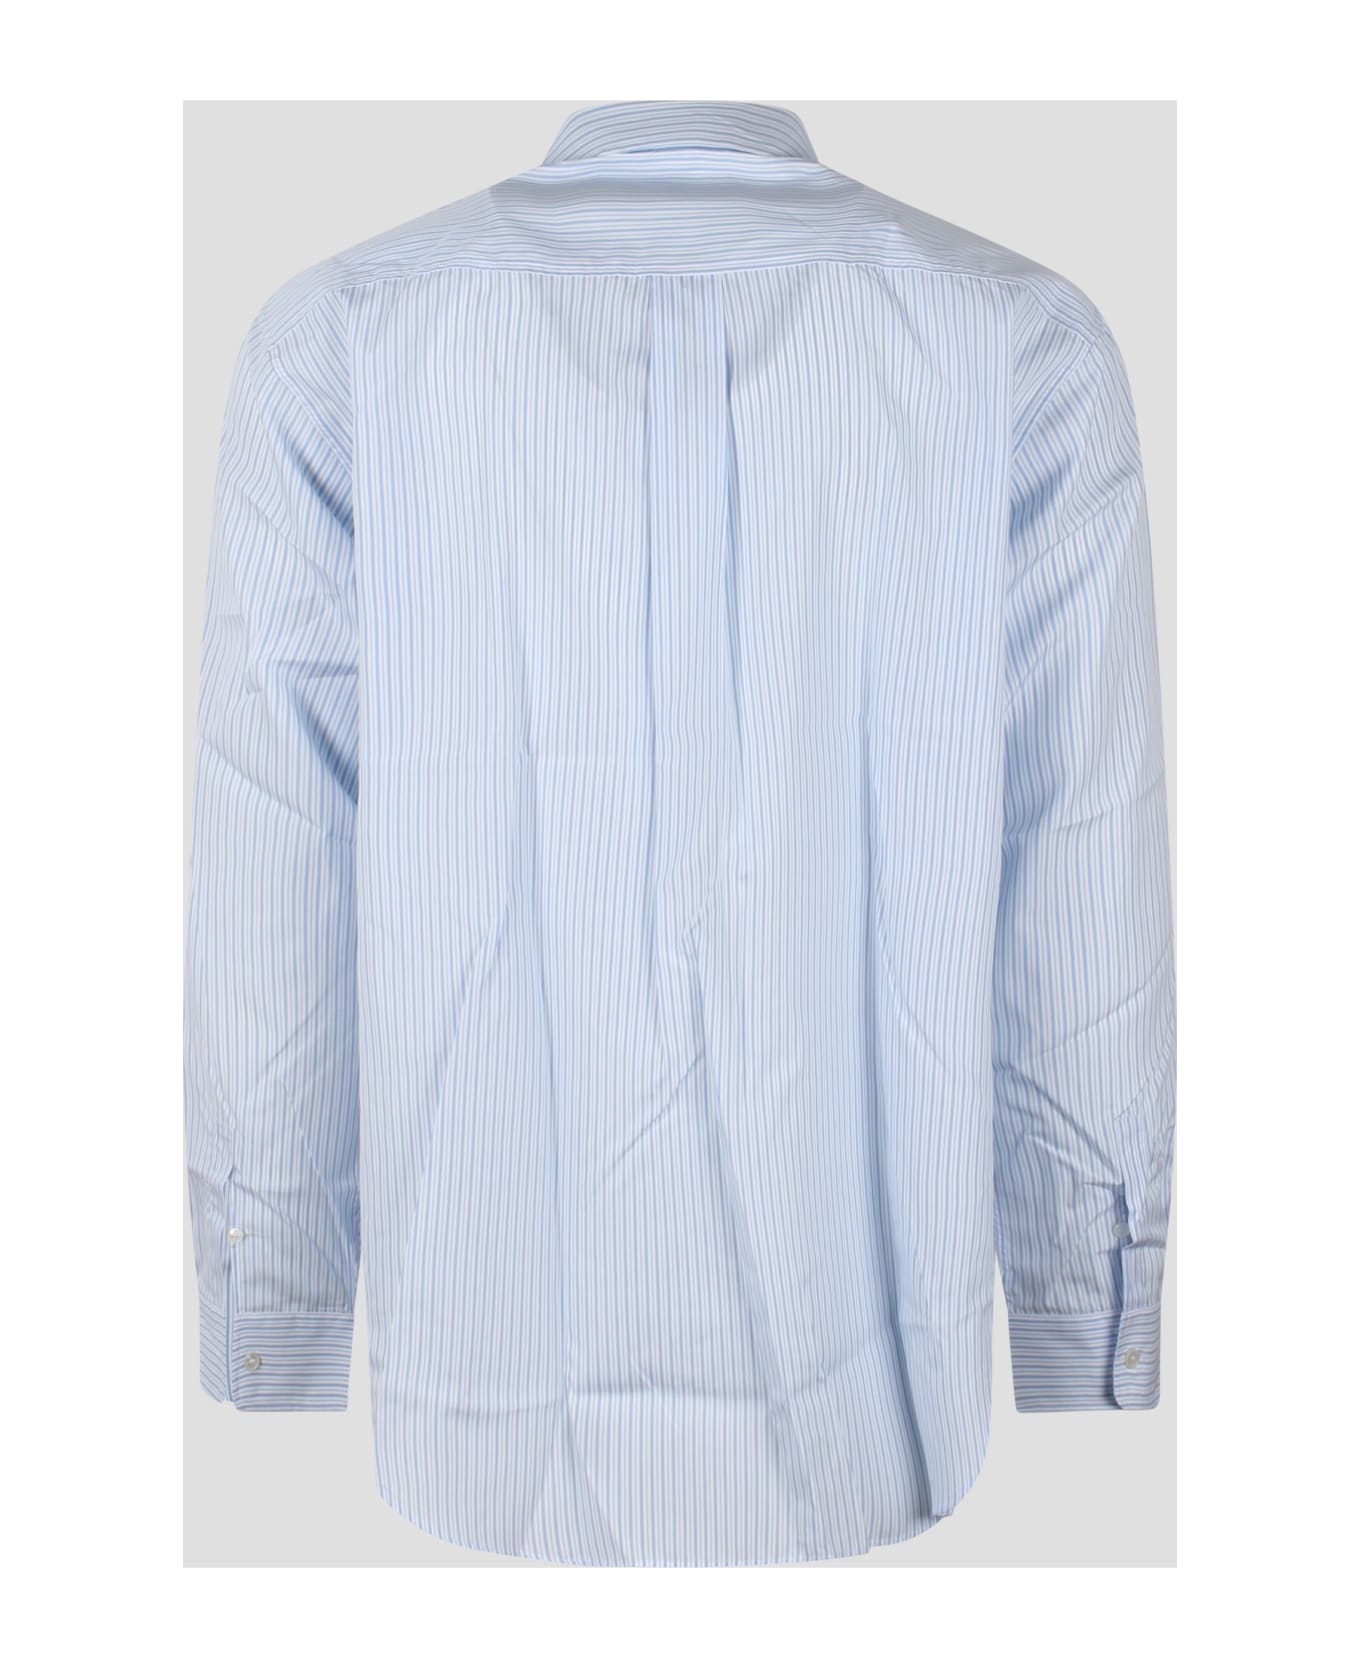 Dior Striped Cotton Poplin Shirt - Blue